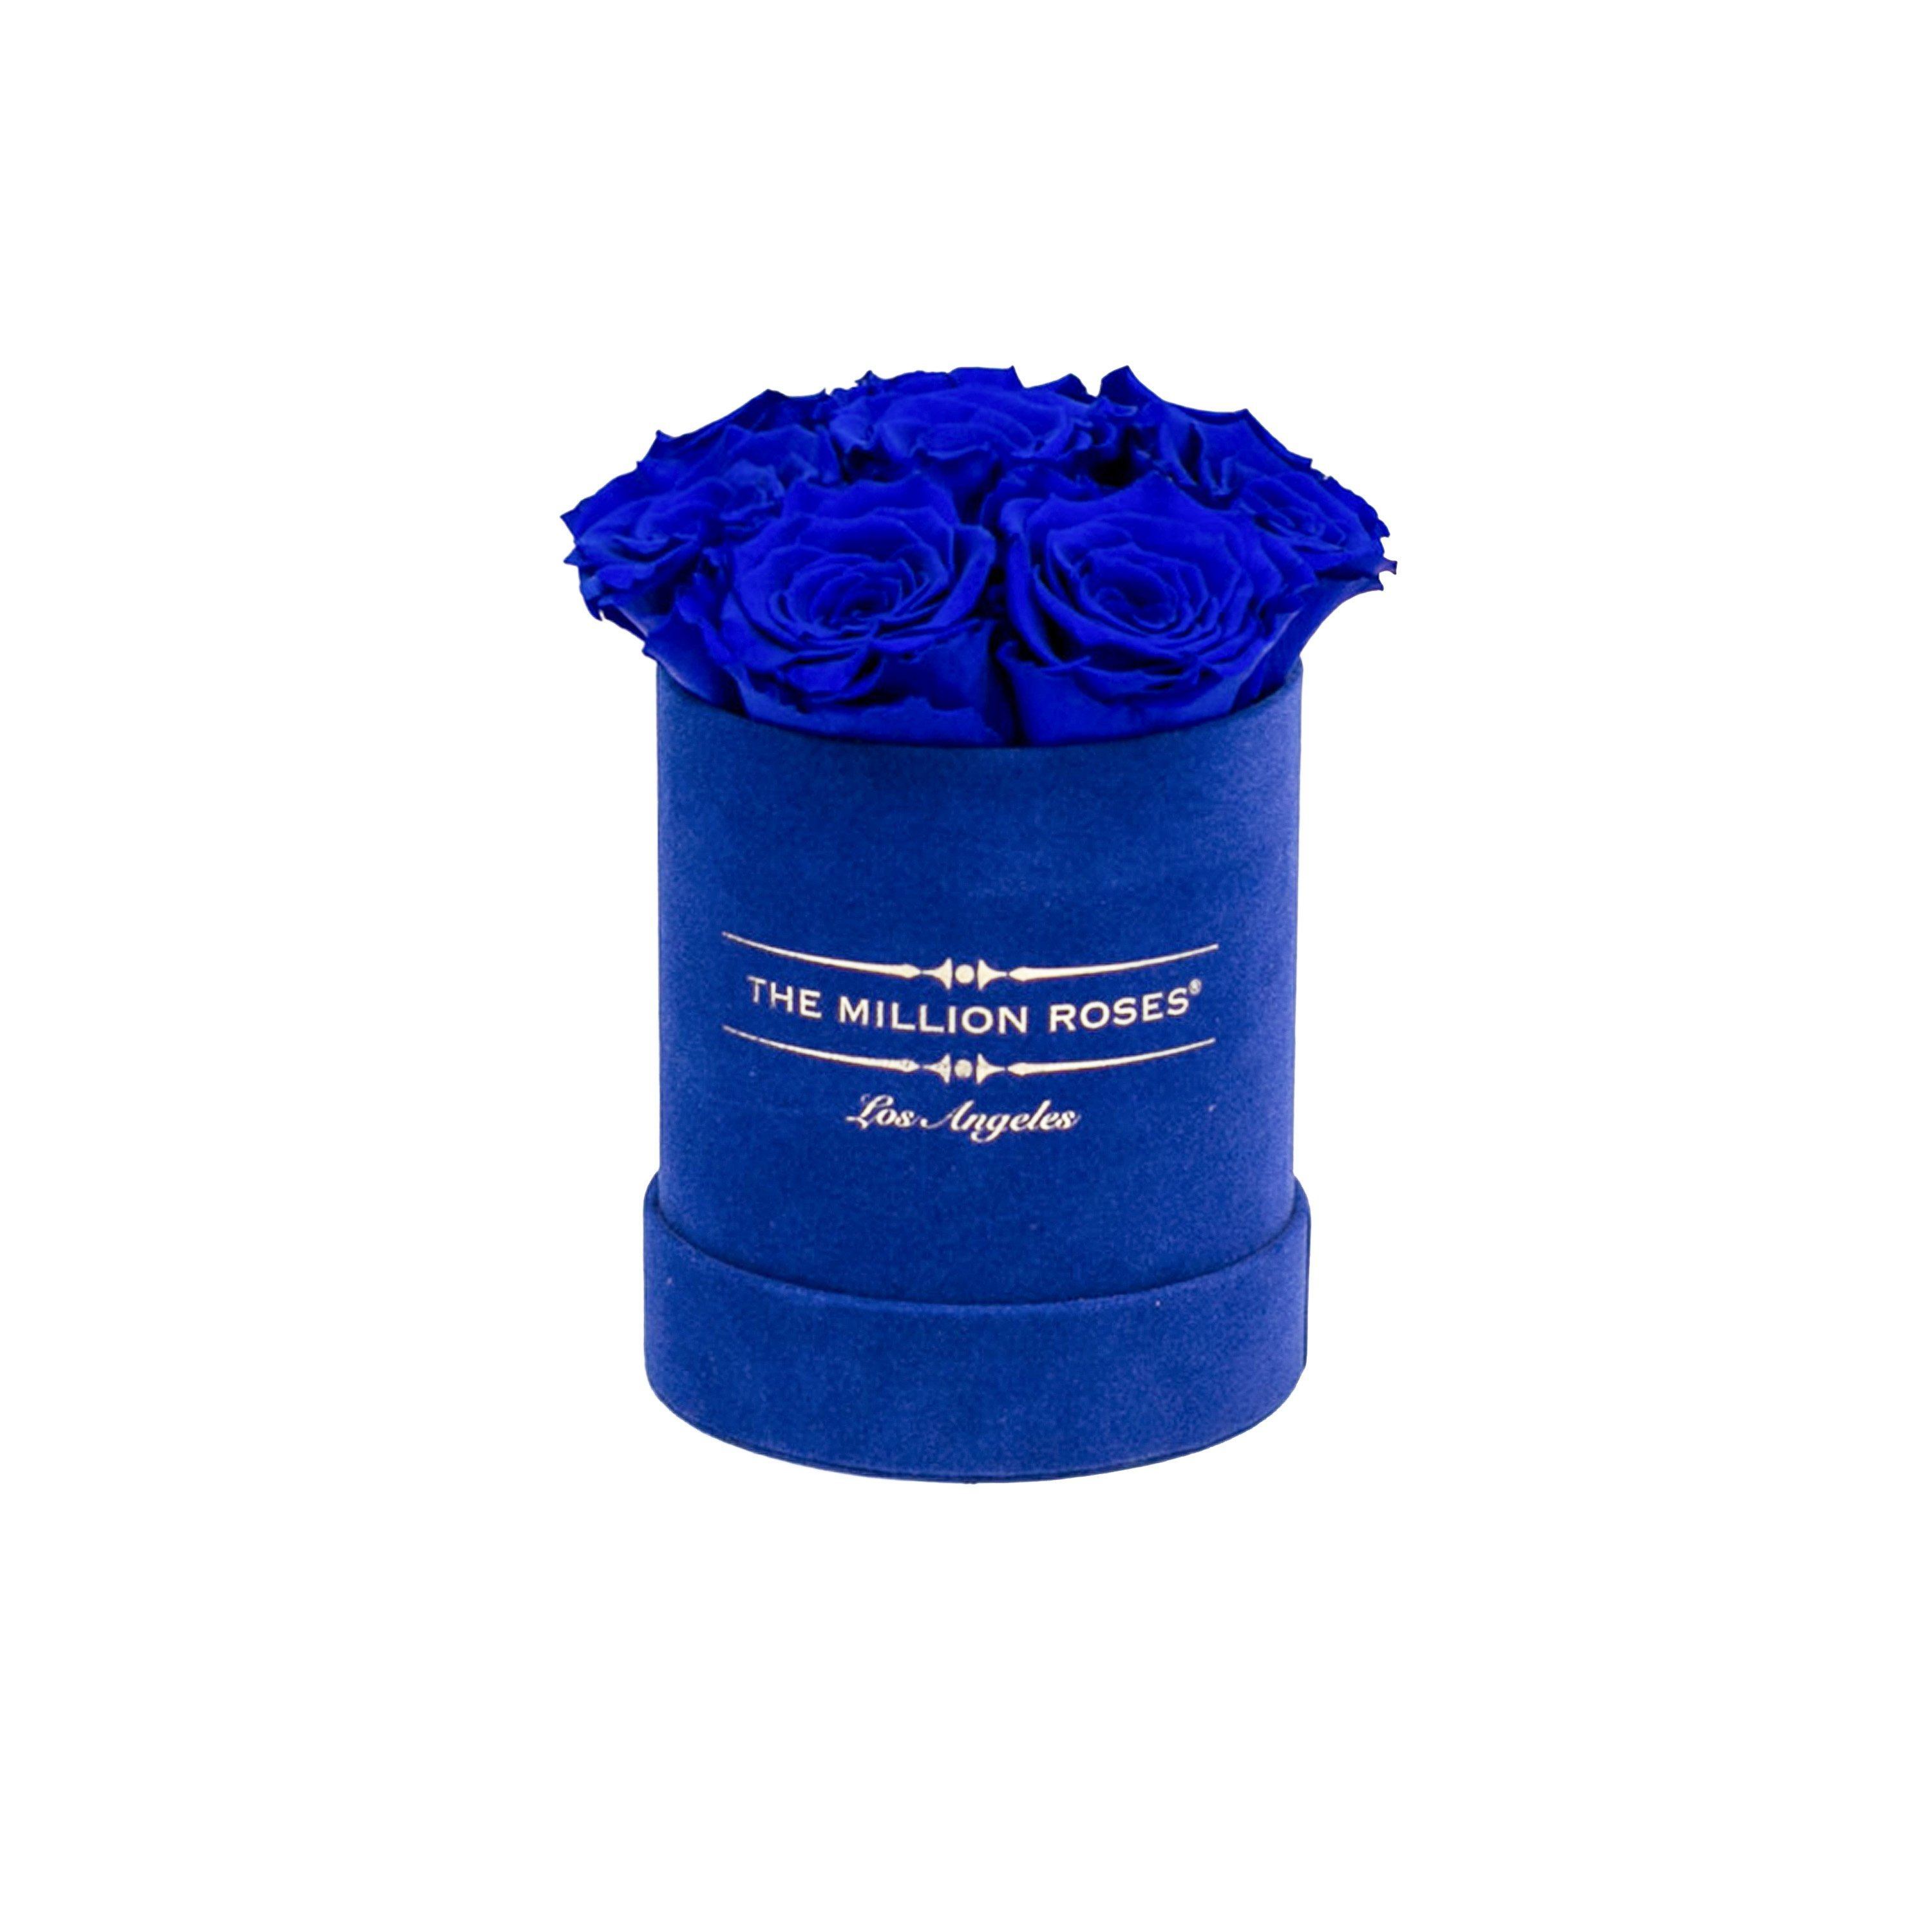 basic round box+ - royal-blue suede box - royal-blue roses blue eternity roses - the million roses